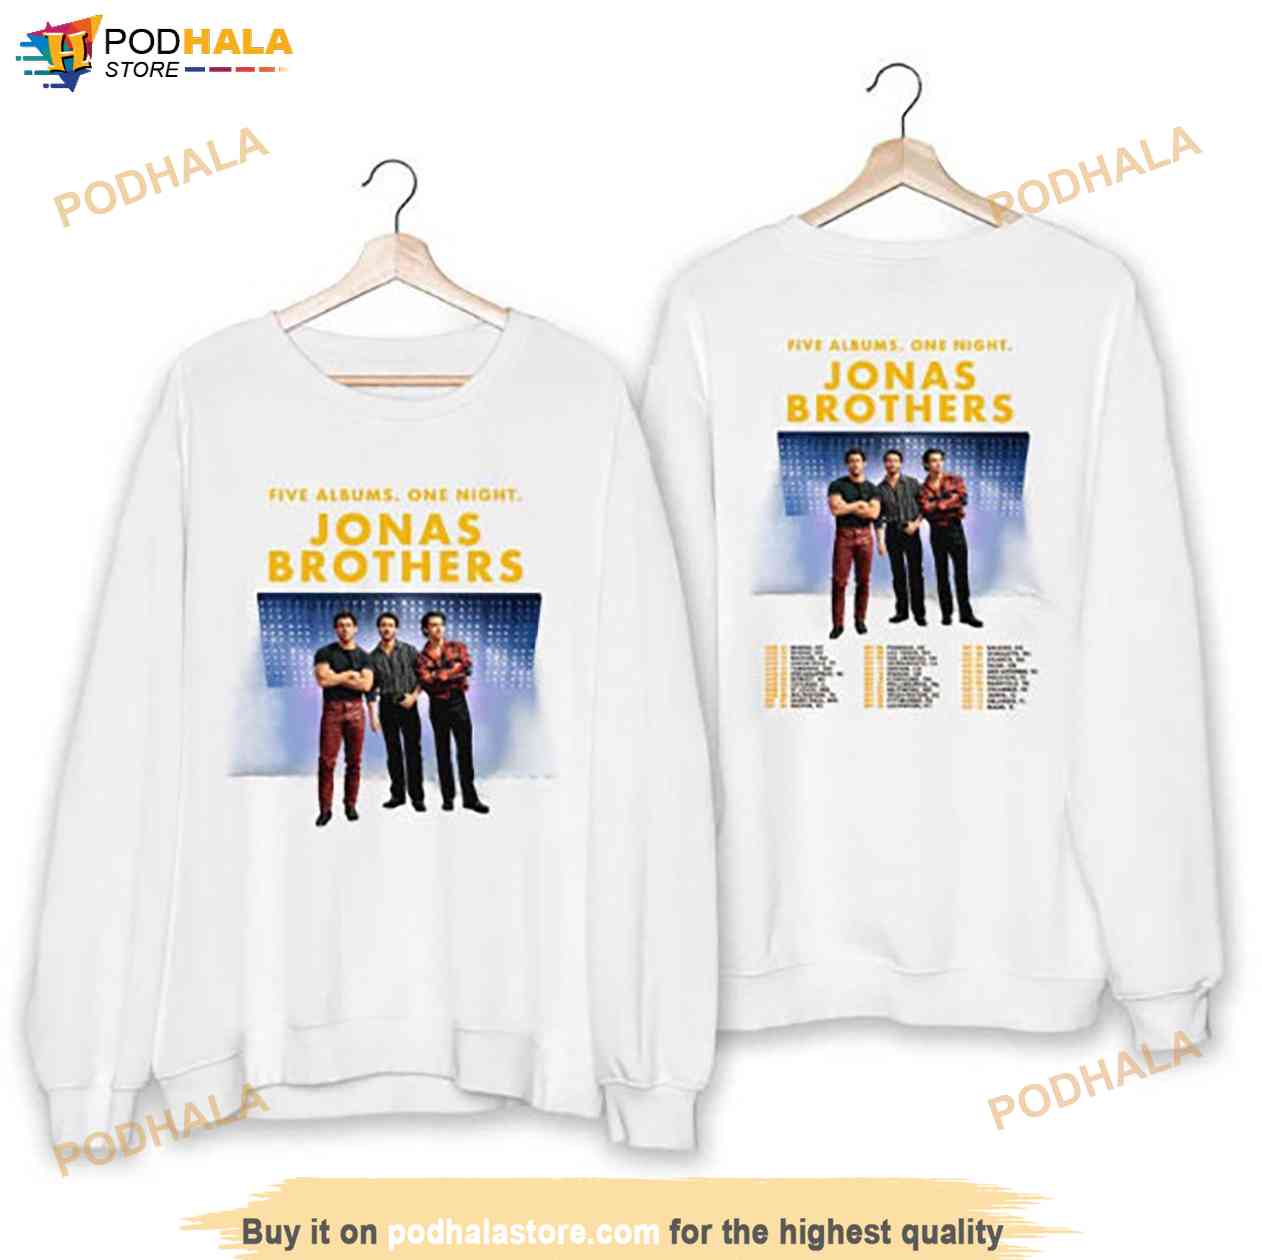 Jonas Brothers Tour Yankee Stadium Shirt 5 Albums 1 Night 